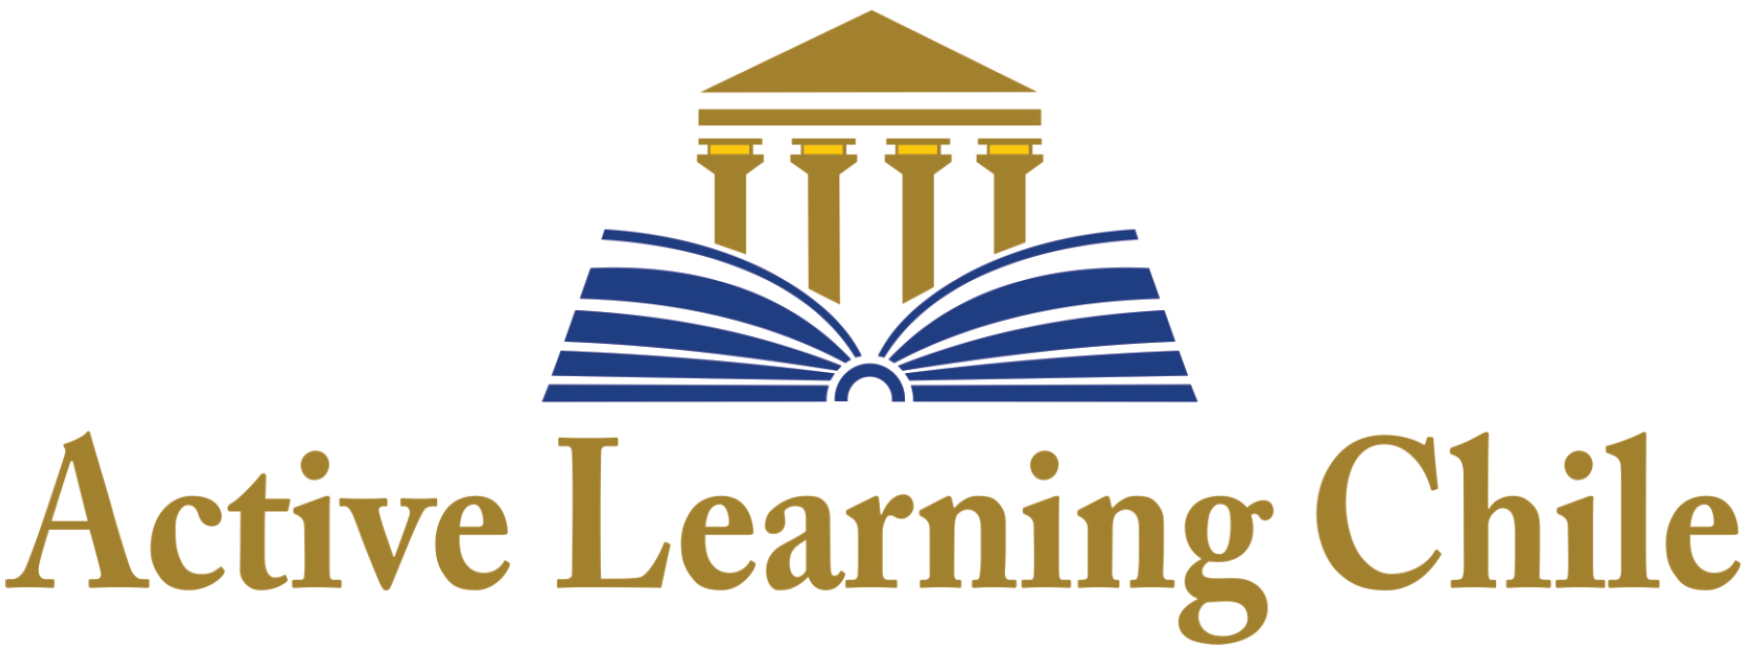 Logo Instituto de Capacitación Active Learning Chile